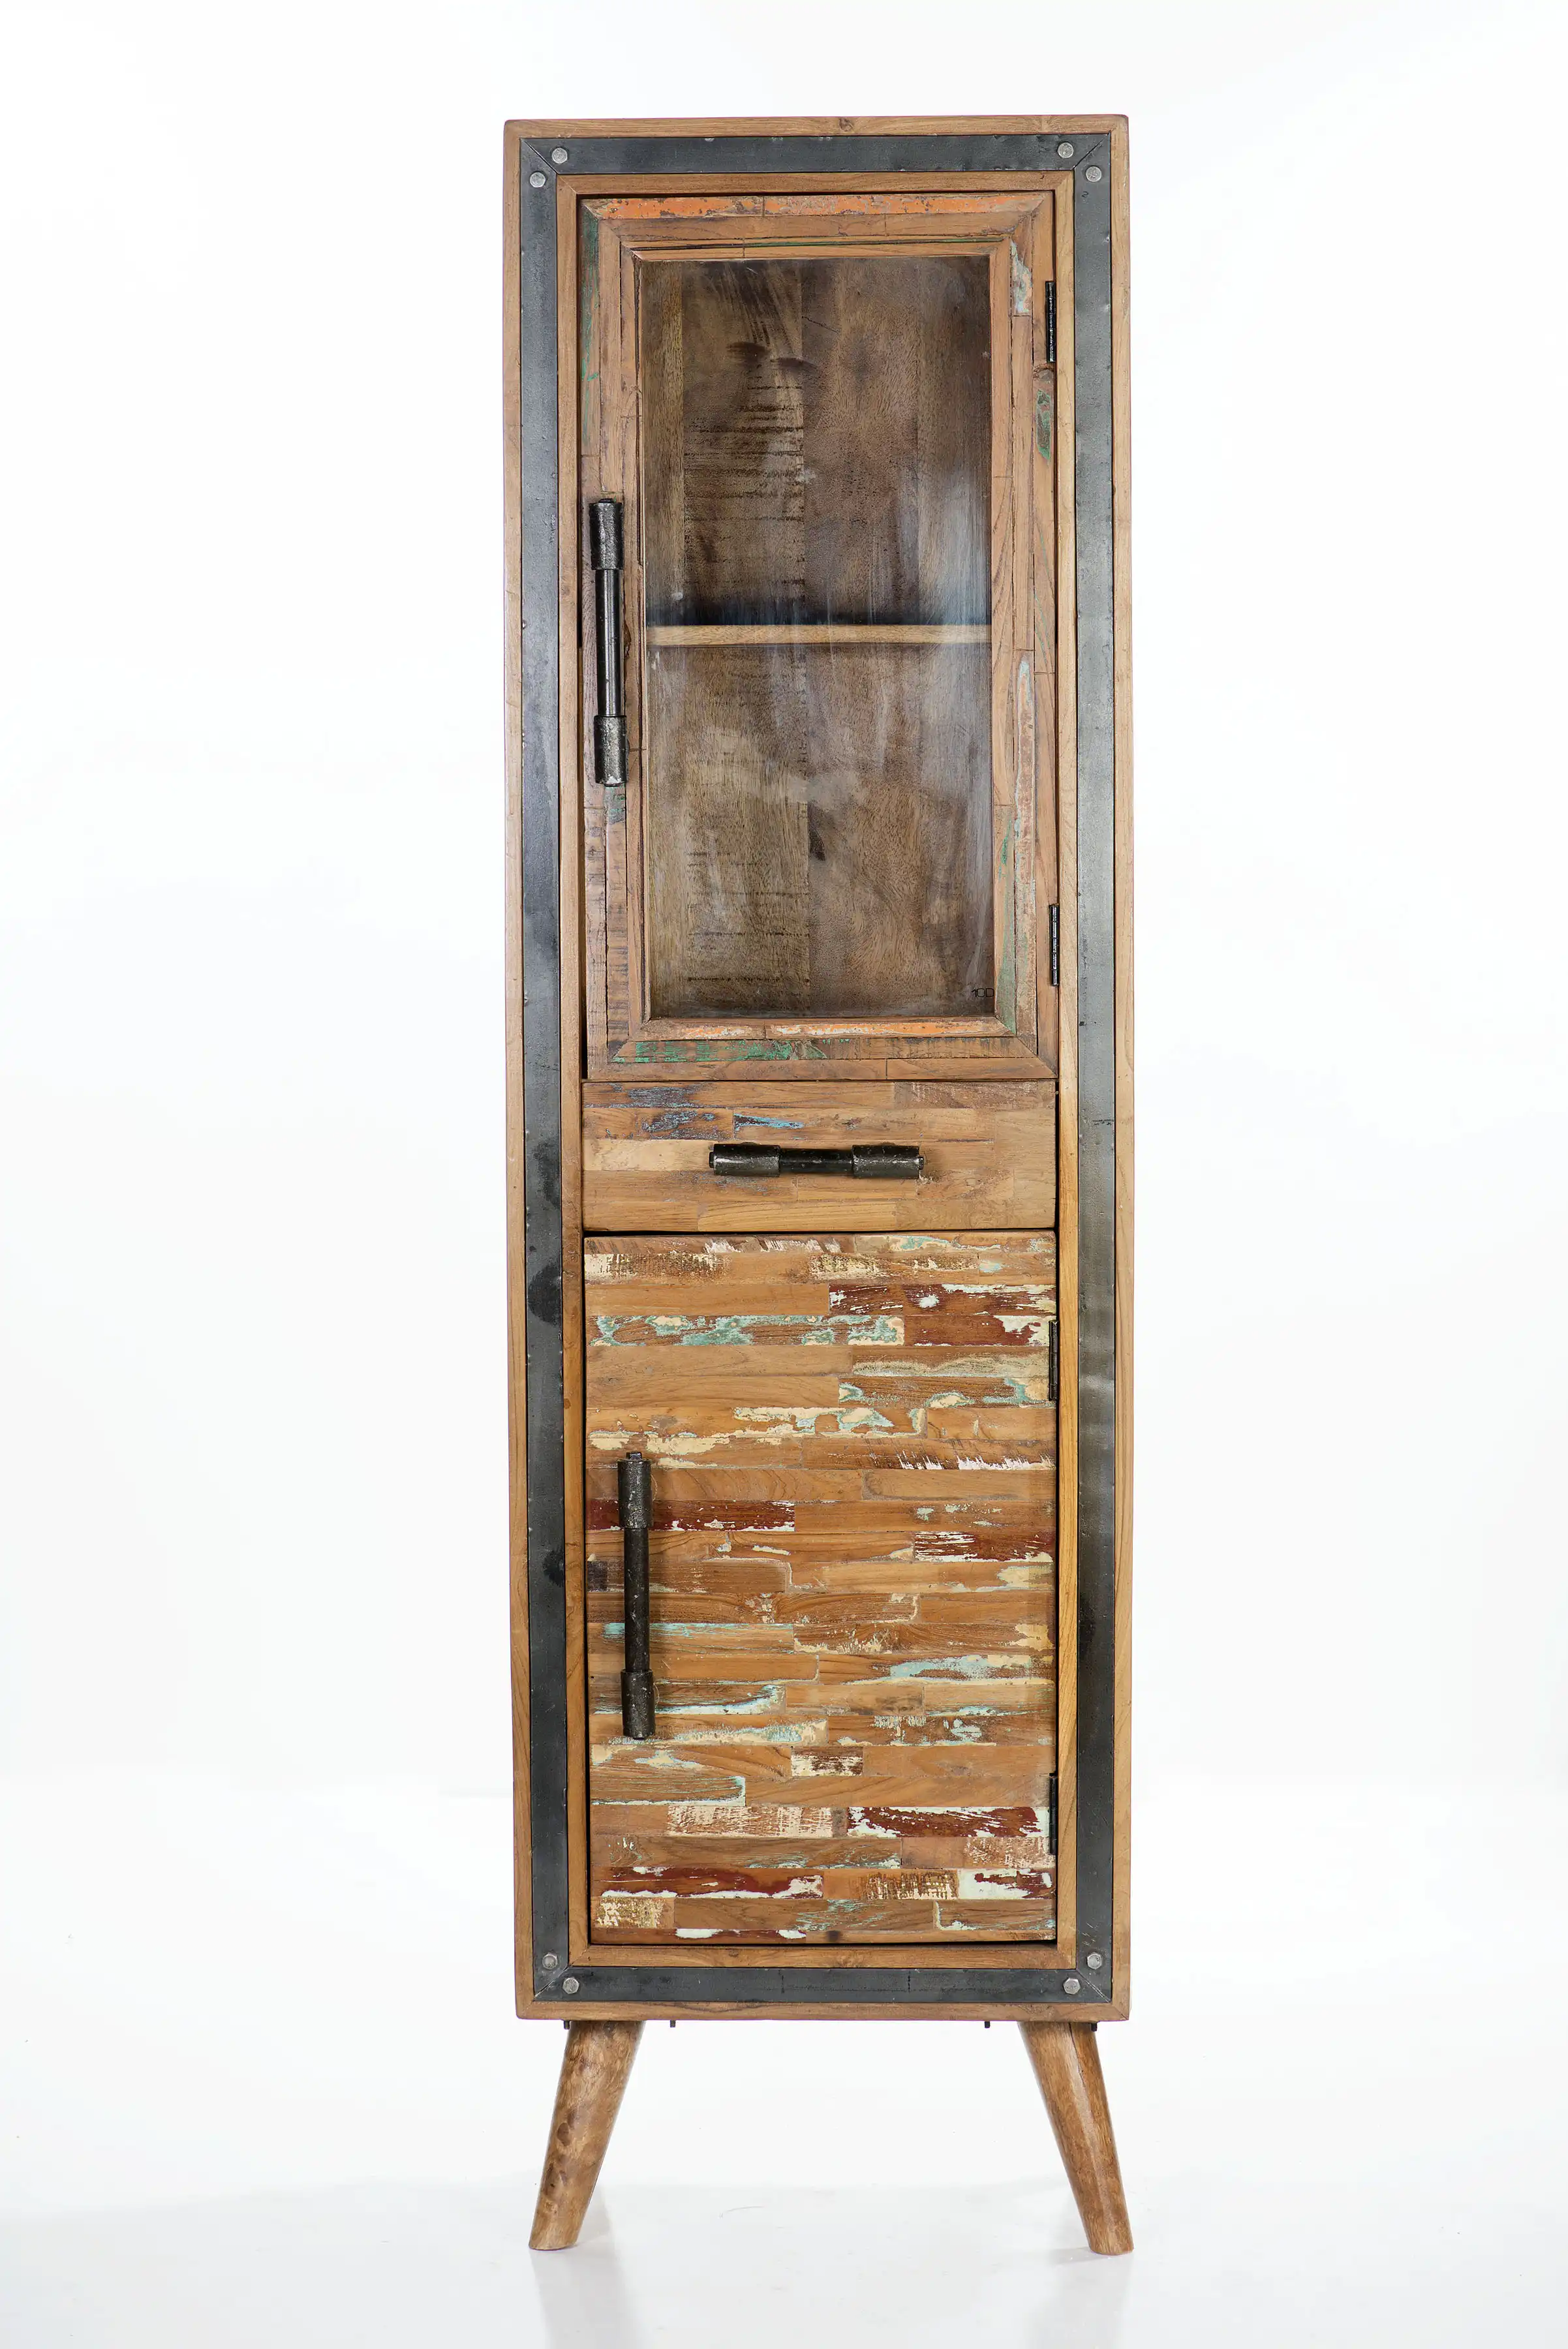 Reclaimed Wood Bookshelf with 3 Drawers
(KD) - popular handicrafts